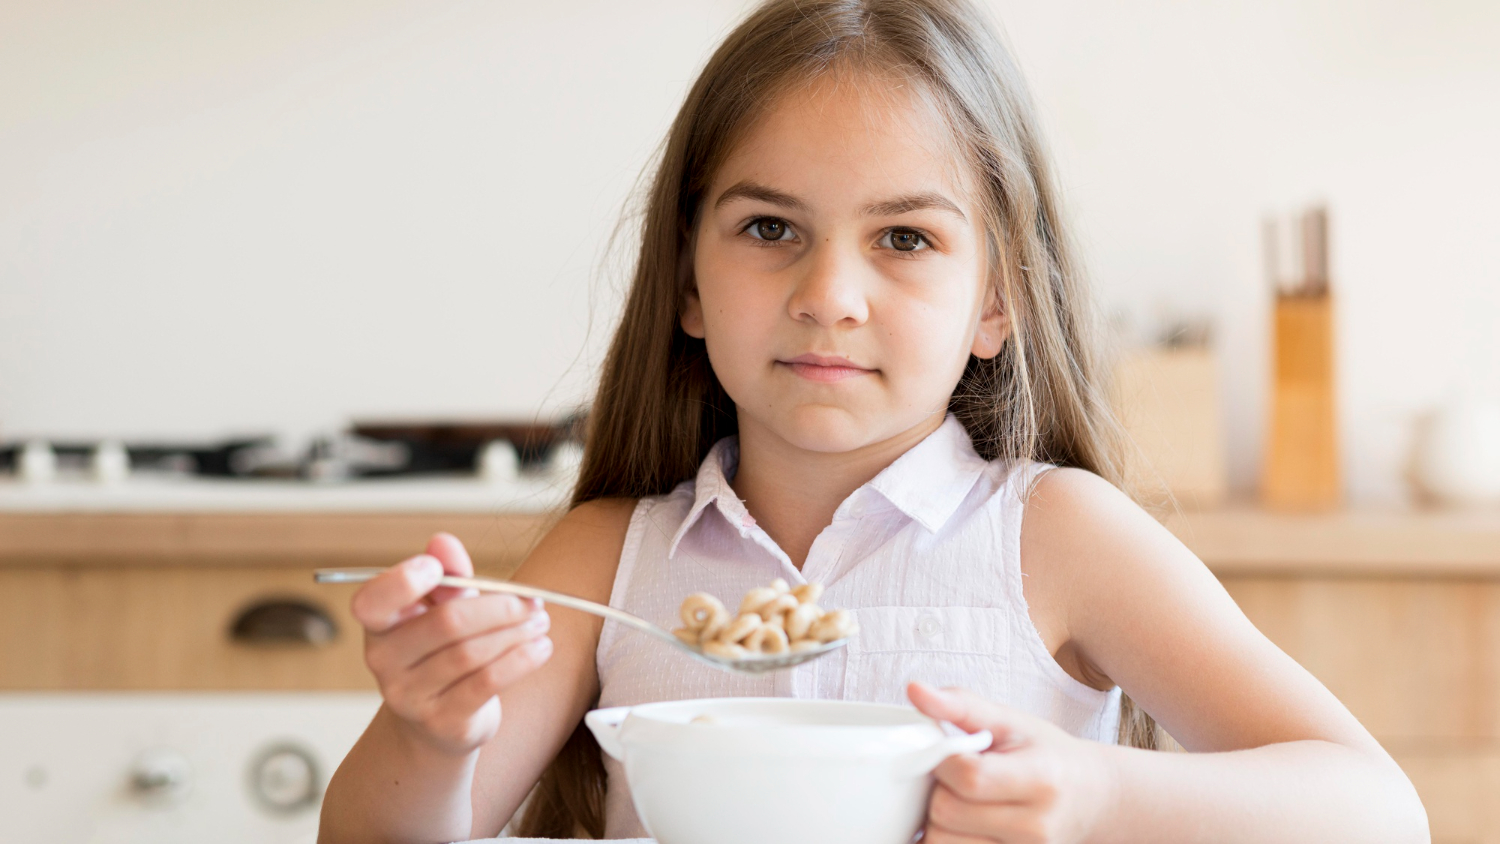 A girl eating cereal | Source: Freepik